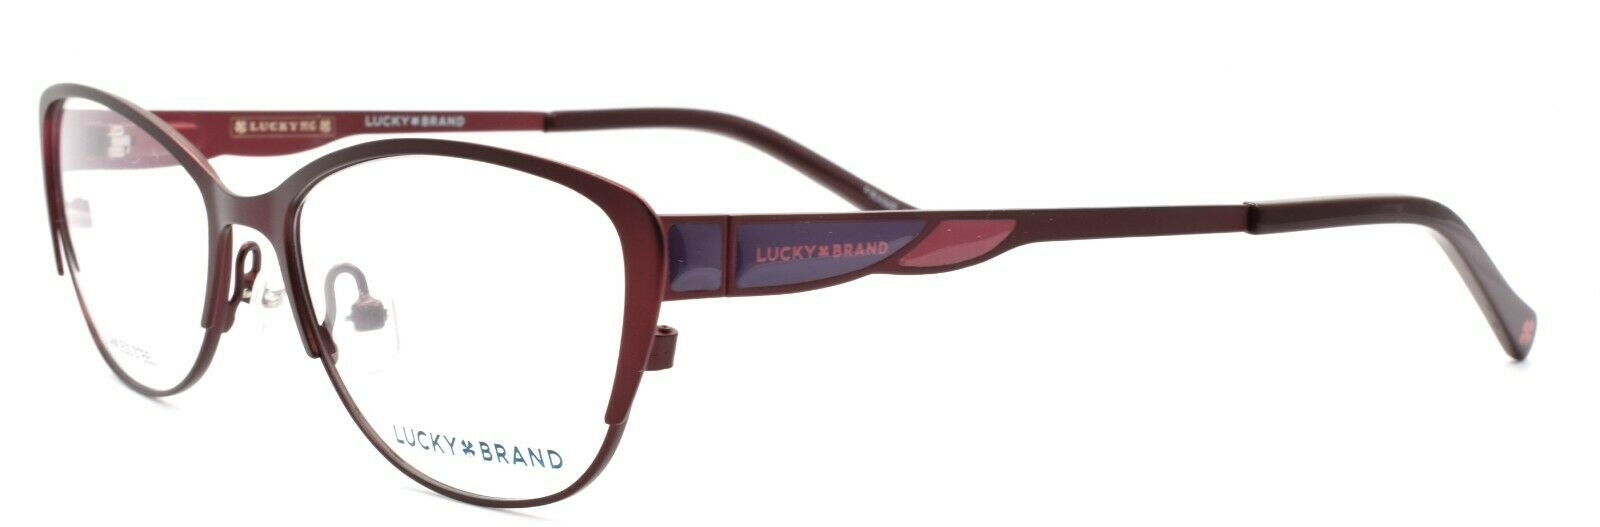 1-LUCKY BRAND D704 Women's Eyeglasses Frames 50-15-135 Burgundy + CASE-751286282252-IKSpecs